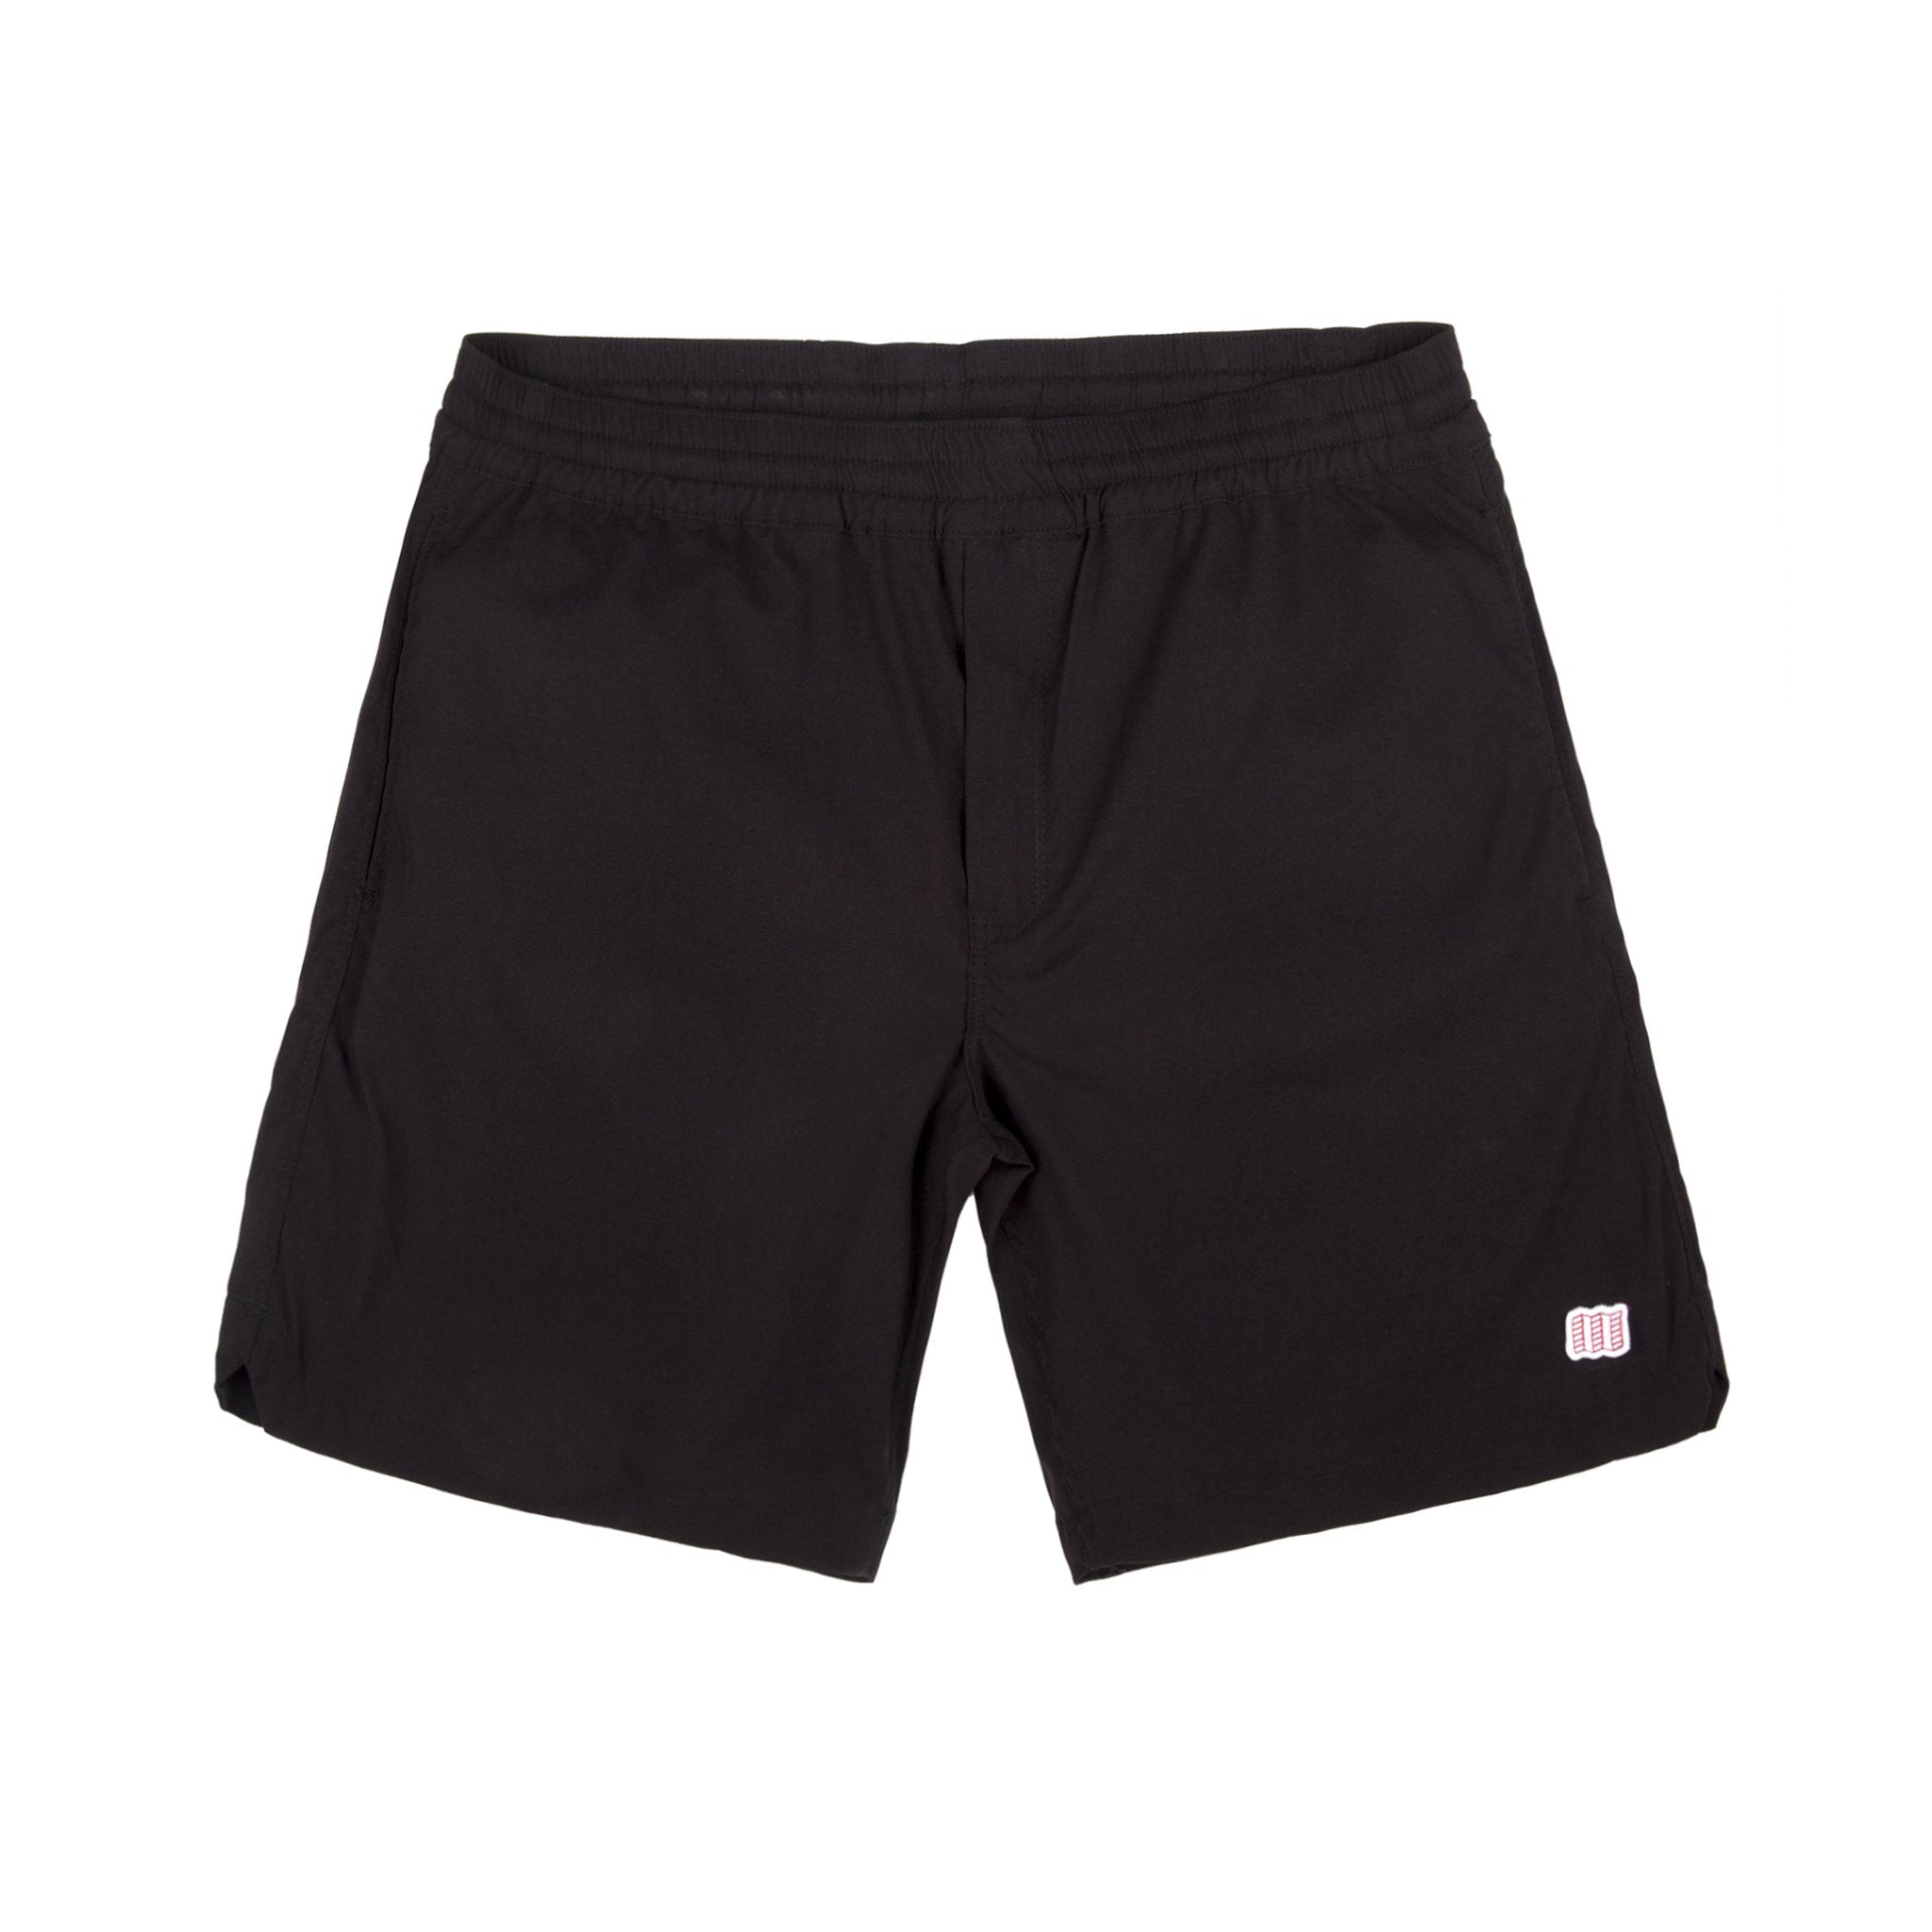 Topo Designs Men's Global lightweight quick dry travel Shorts in Black.